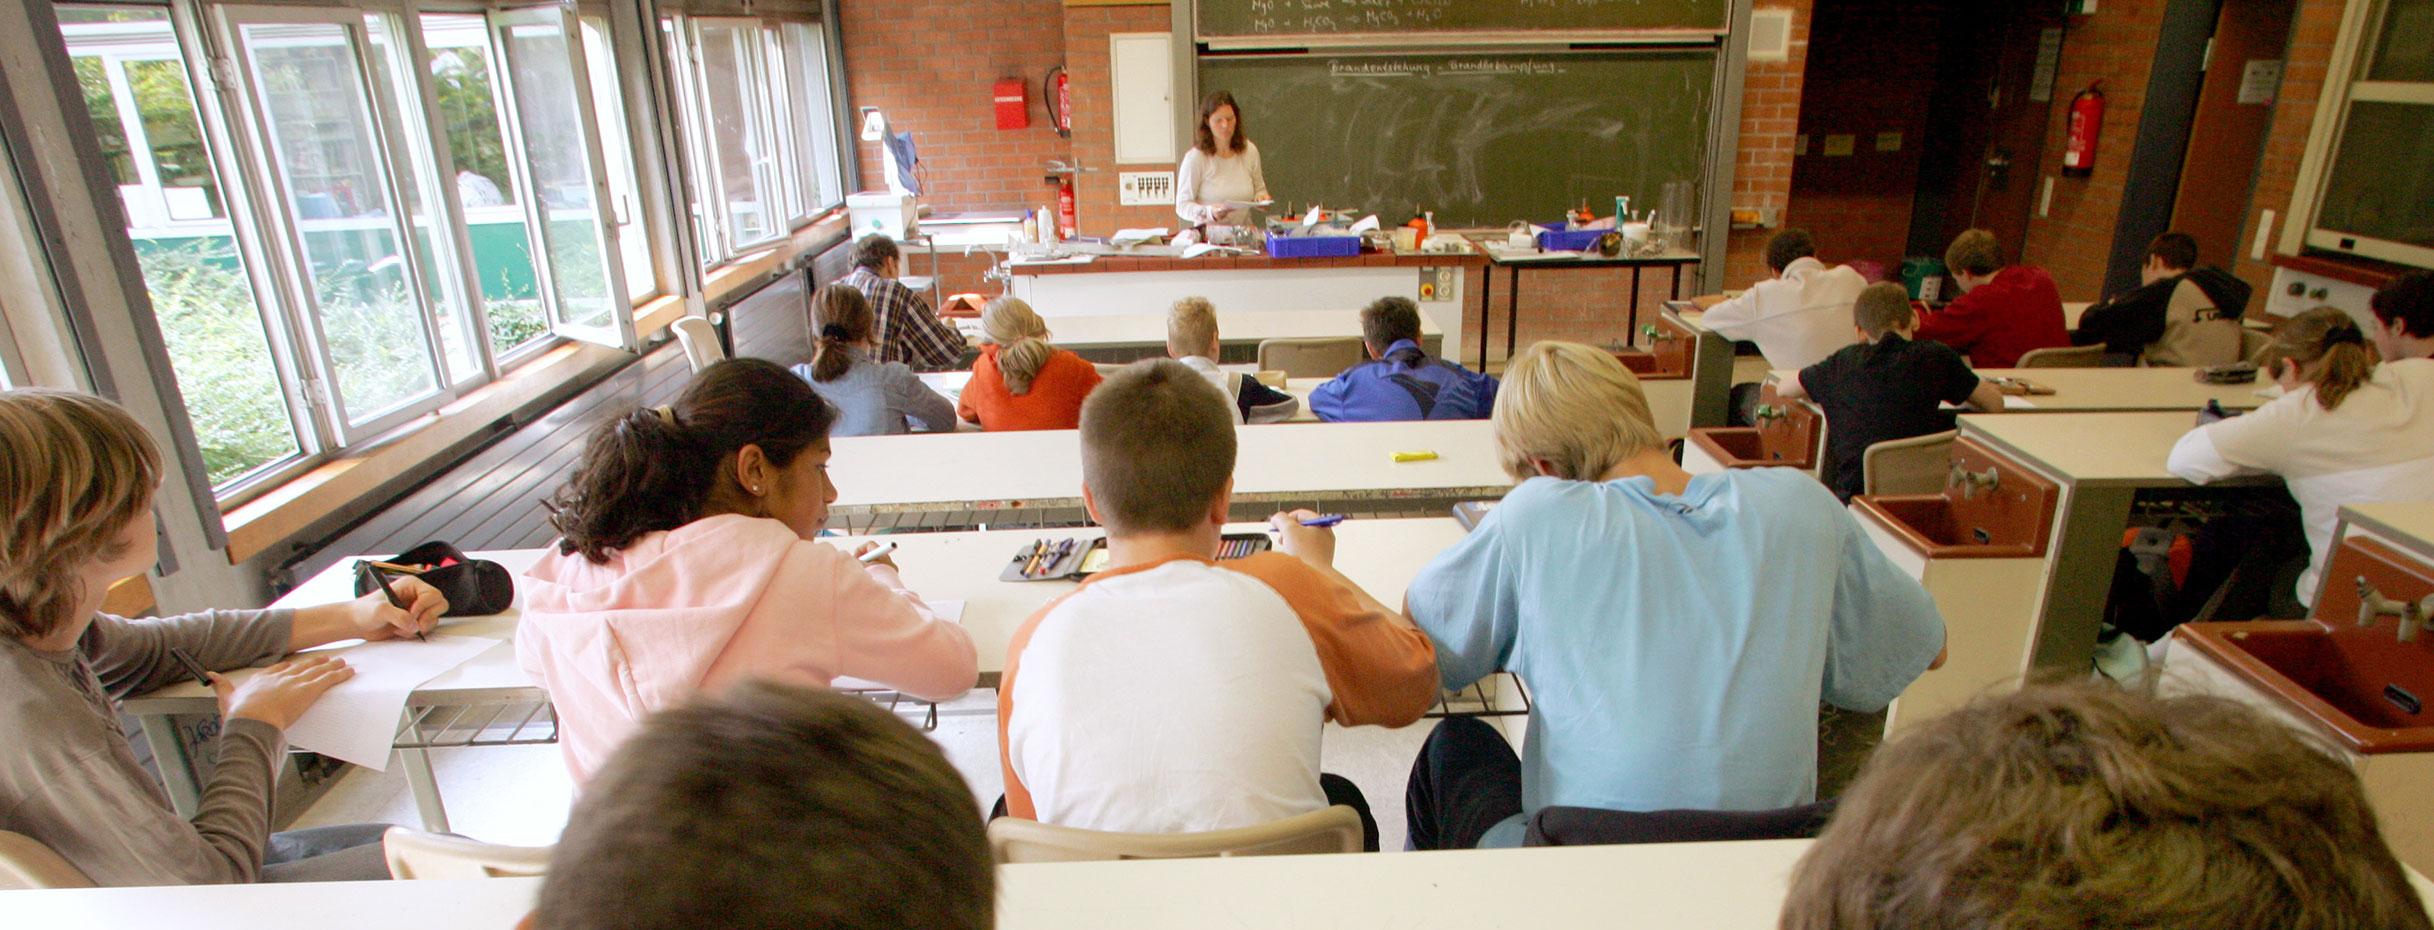 Schüler während des Unterrichts im Klassenraum (Foto: Patrick Seeger dpa/lsw)